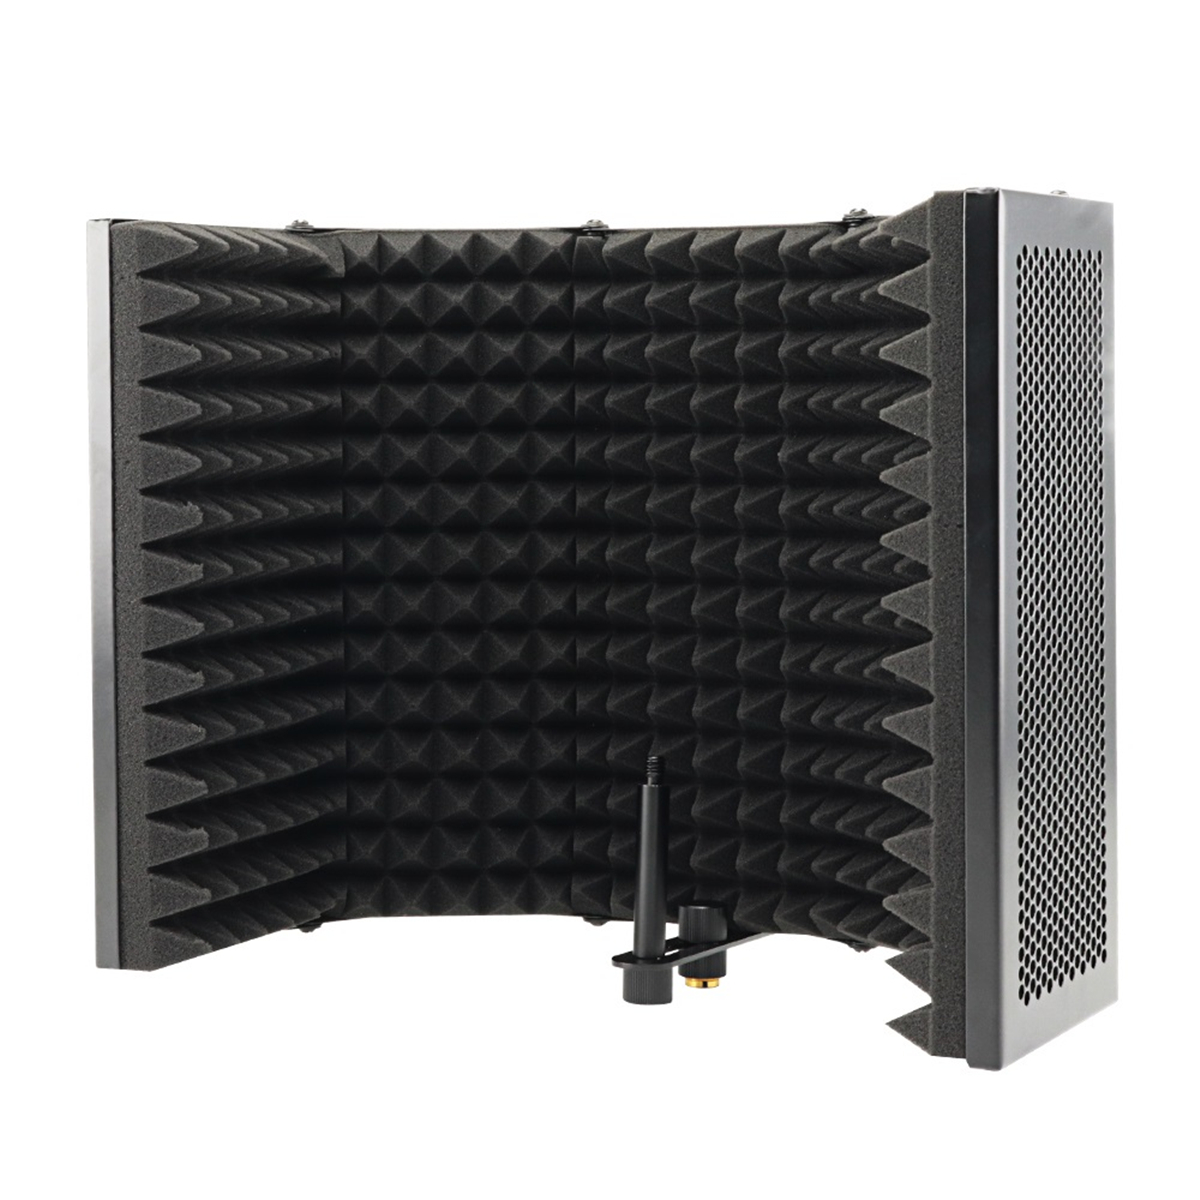 575-x-28cm-Foldable-Adjustable-Studio-Recording-Microphone-Isolator-Sound-Absorbing-Foam-Panel-Mic-I-1561155-7